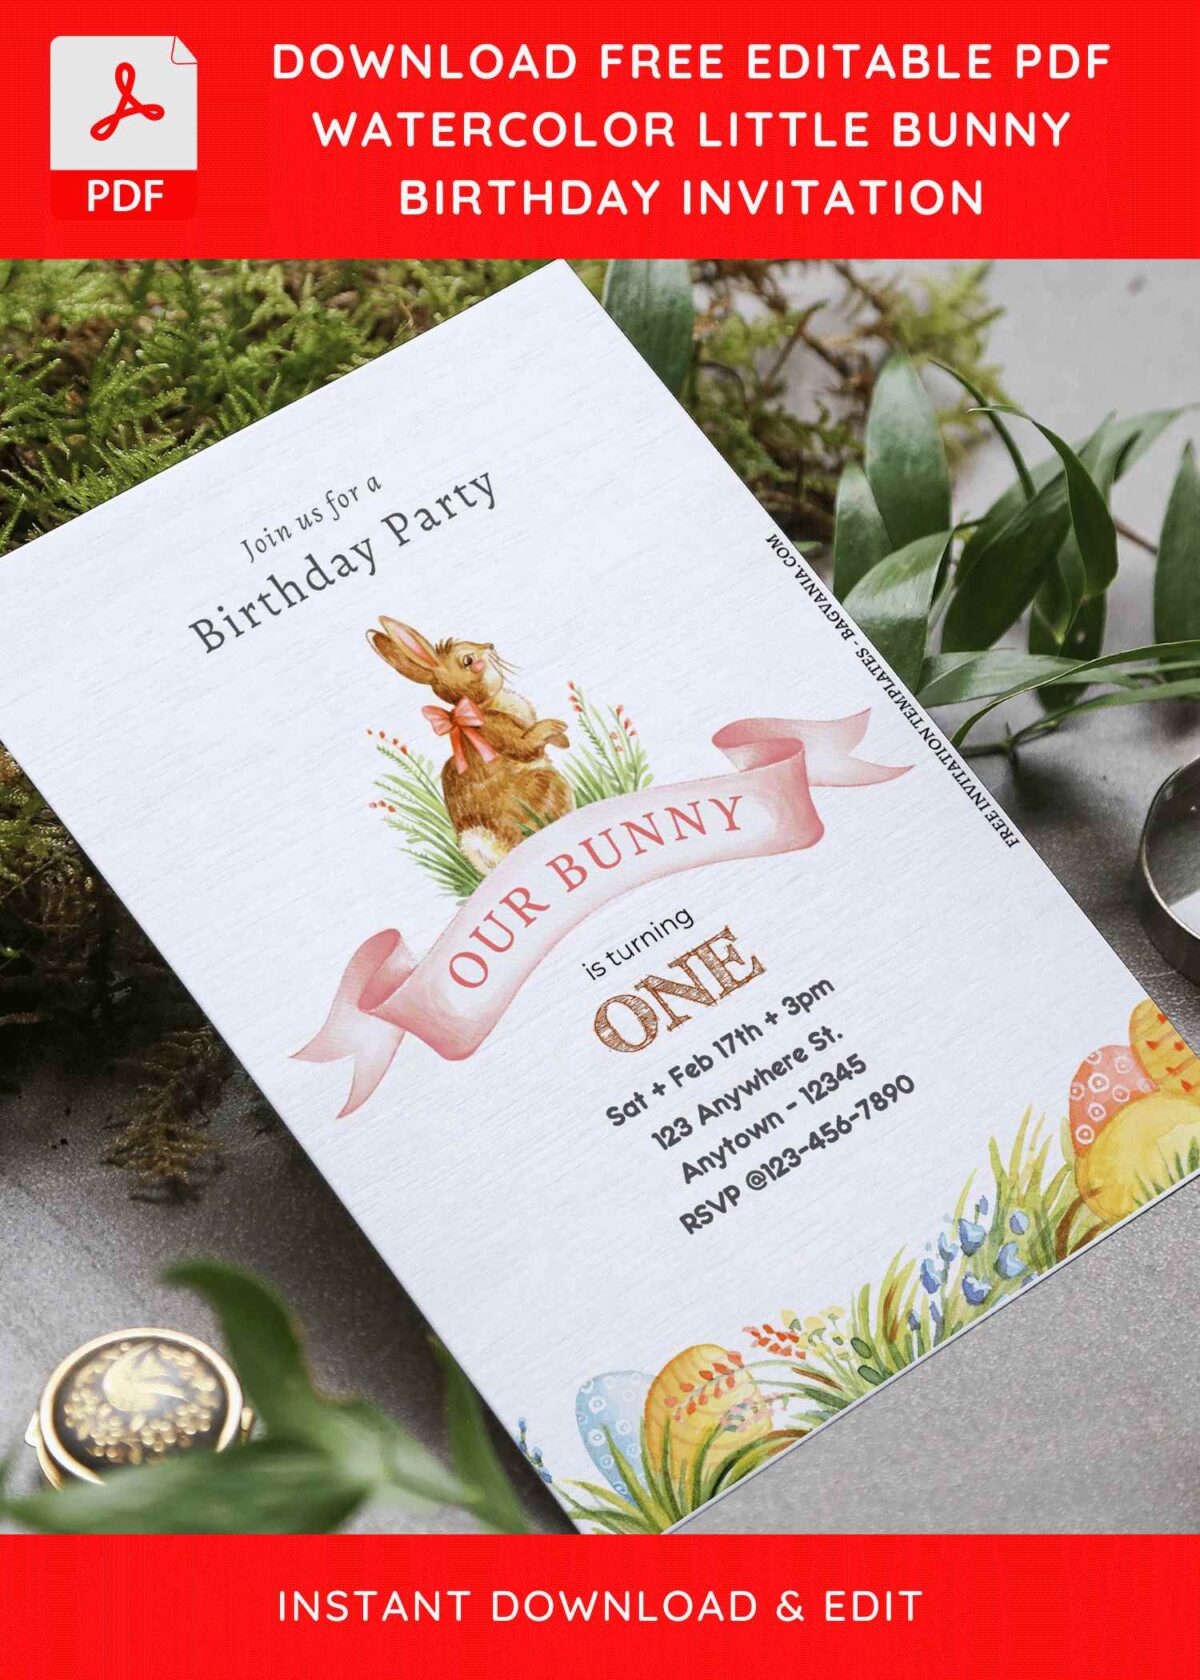 (Free Editable PDF) Watercolor Easter Bunny Birthday Invitation Templates E